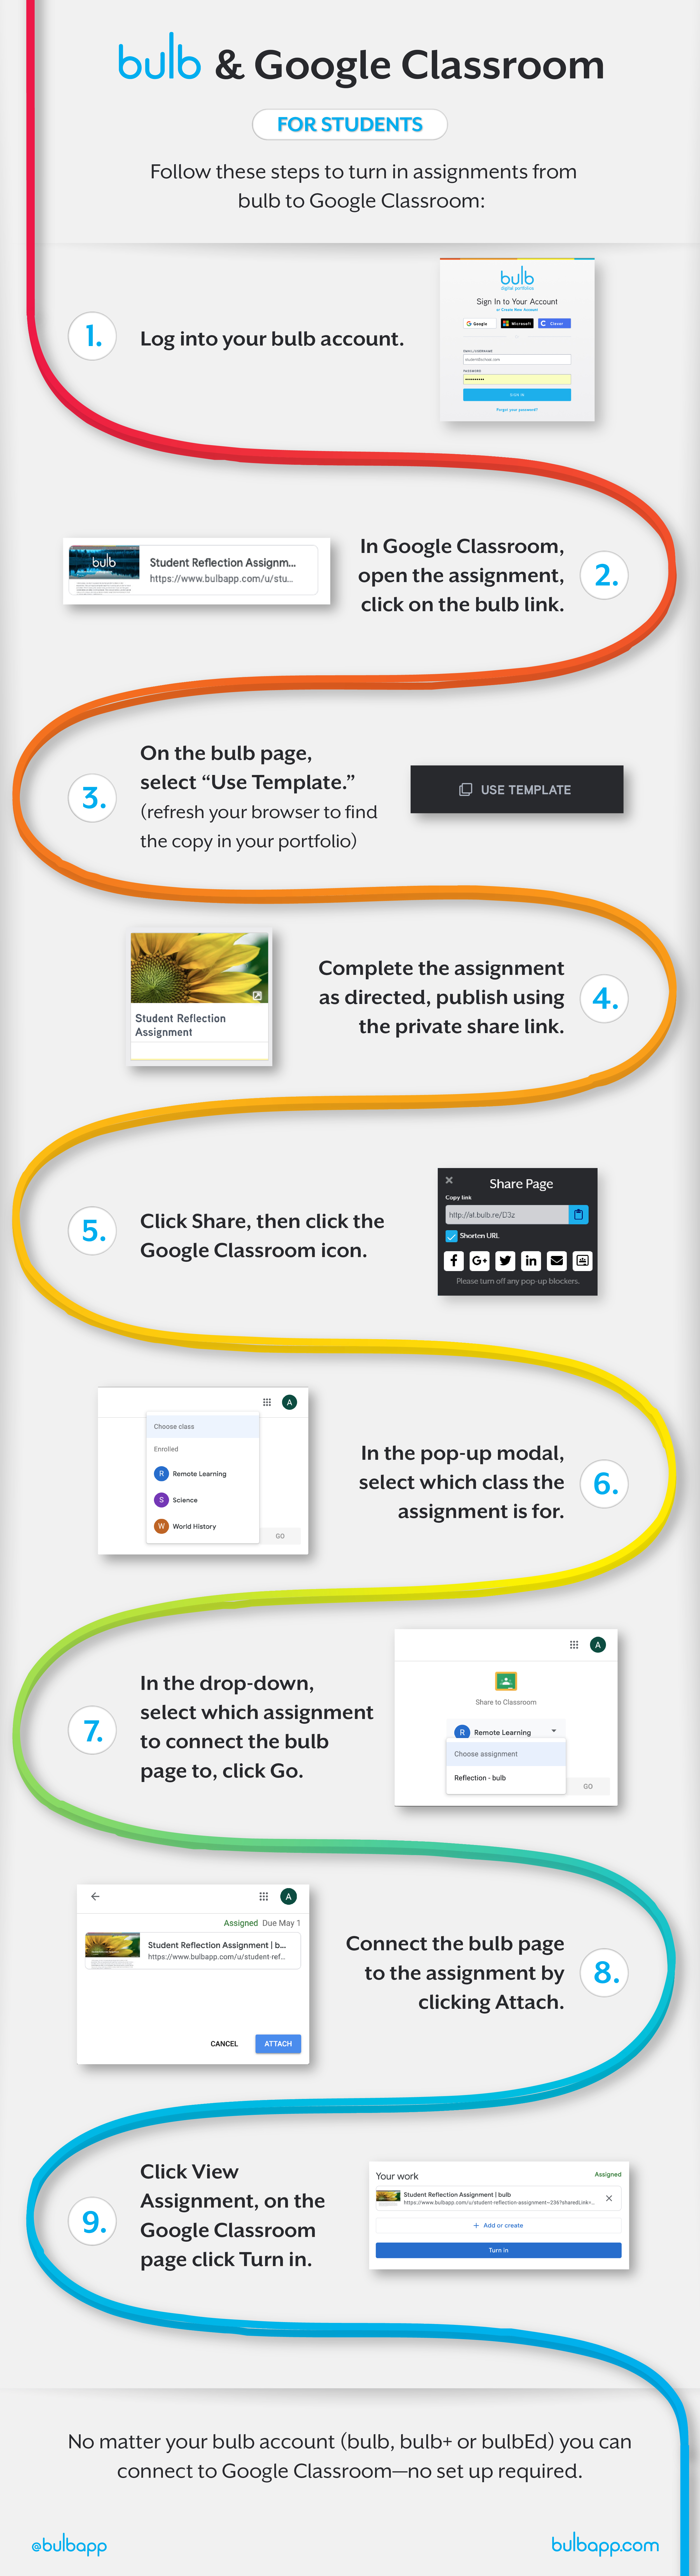 google_classroom_students.jpg